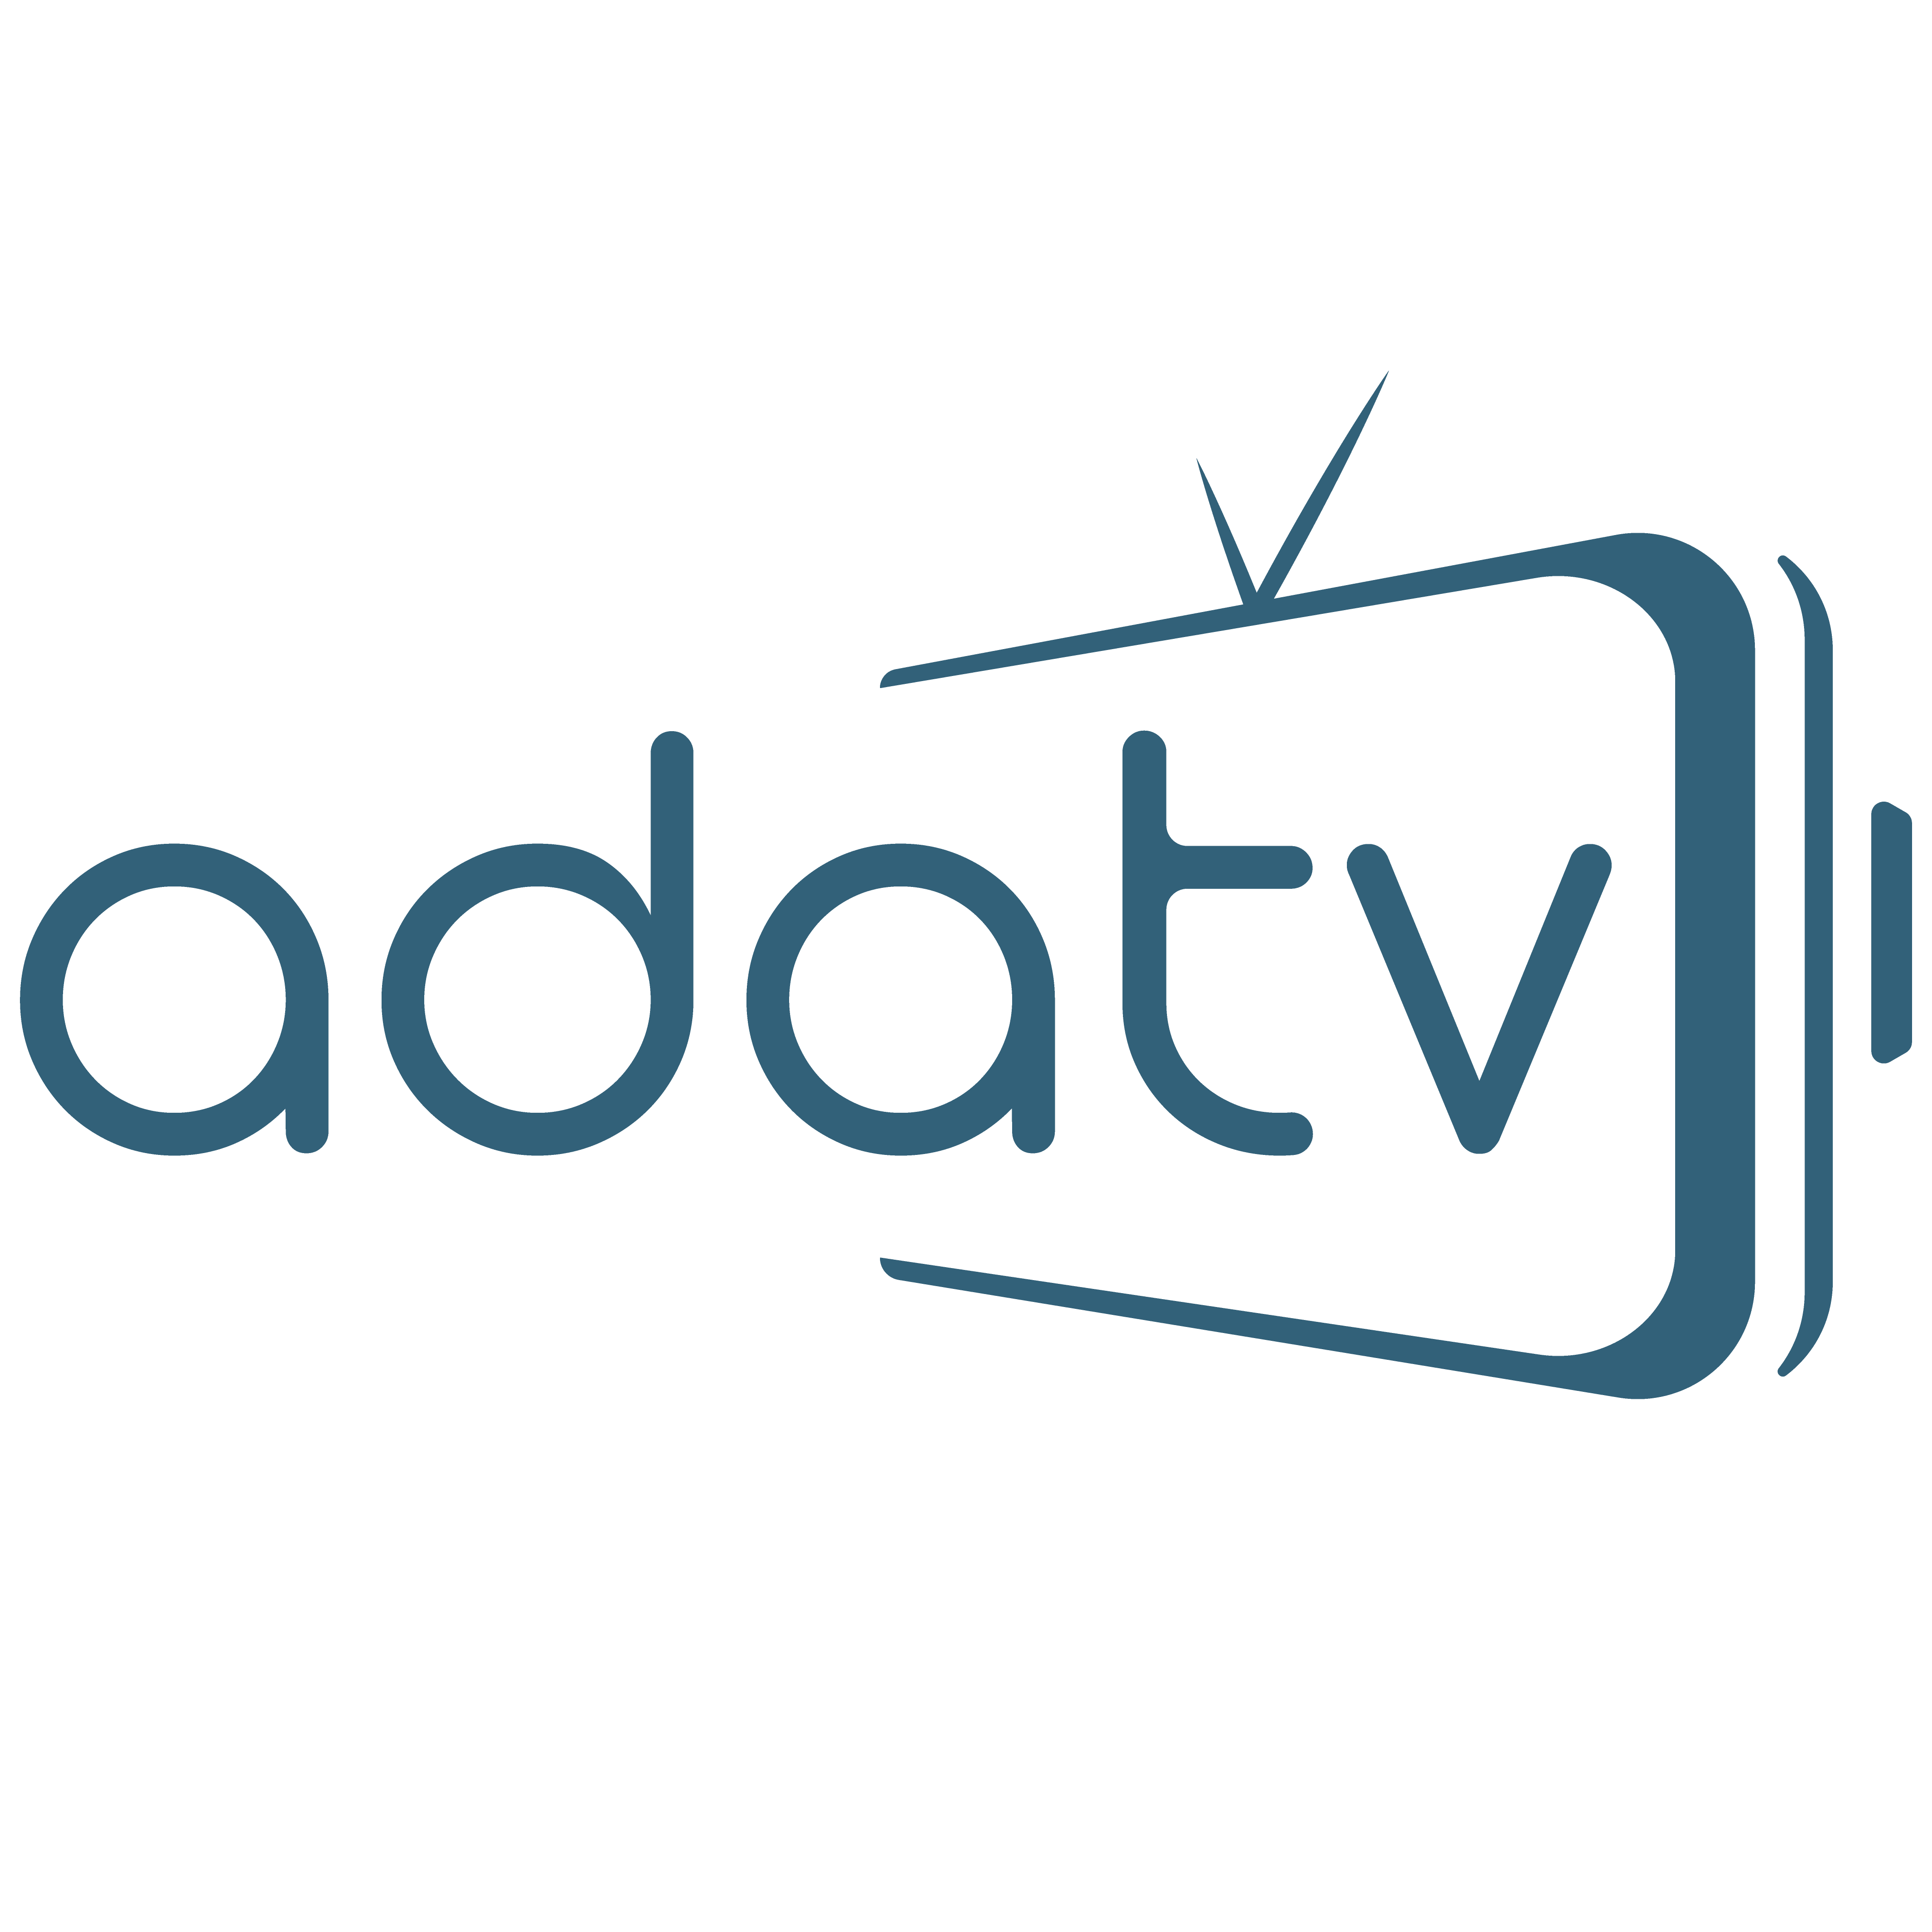 ADATV (Organization)